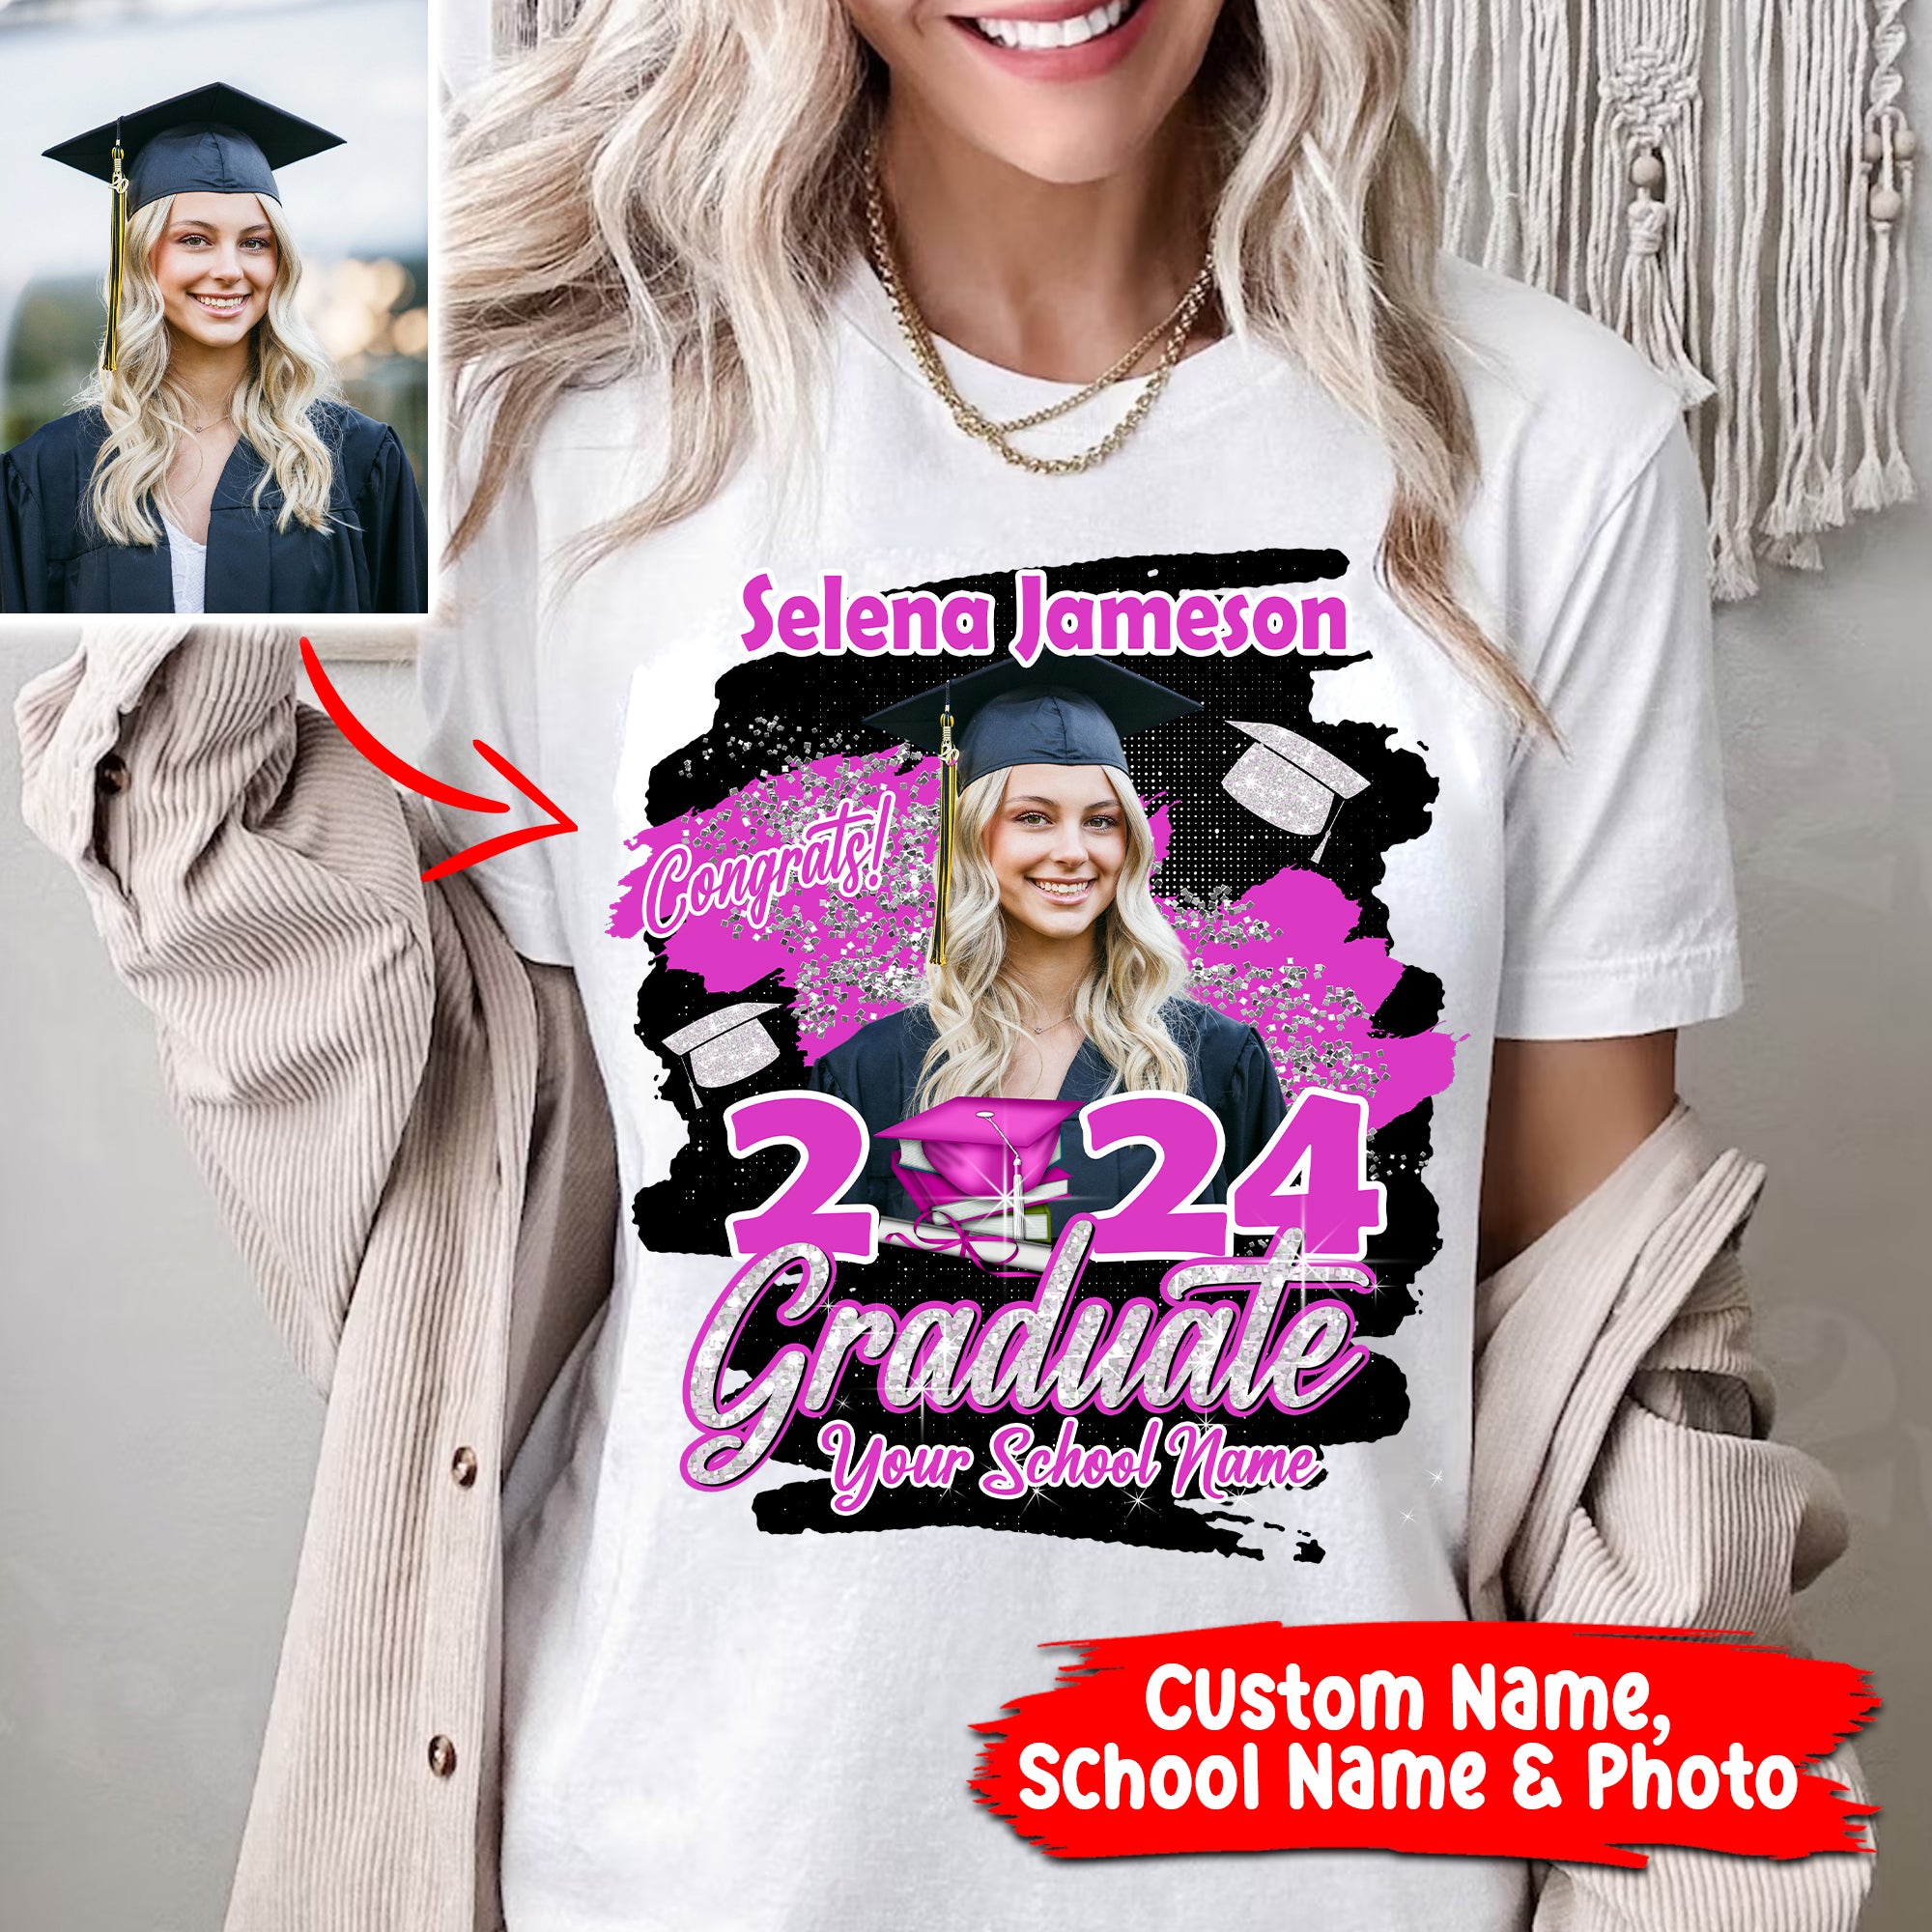 Congrats Graduate 2024 - Custom Photo And Texts Graduation Gift - Personalized T-Shirt